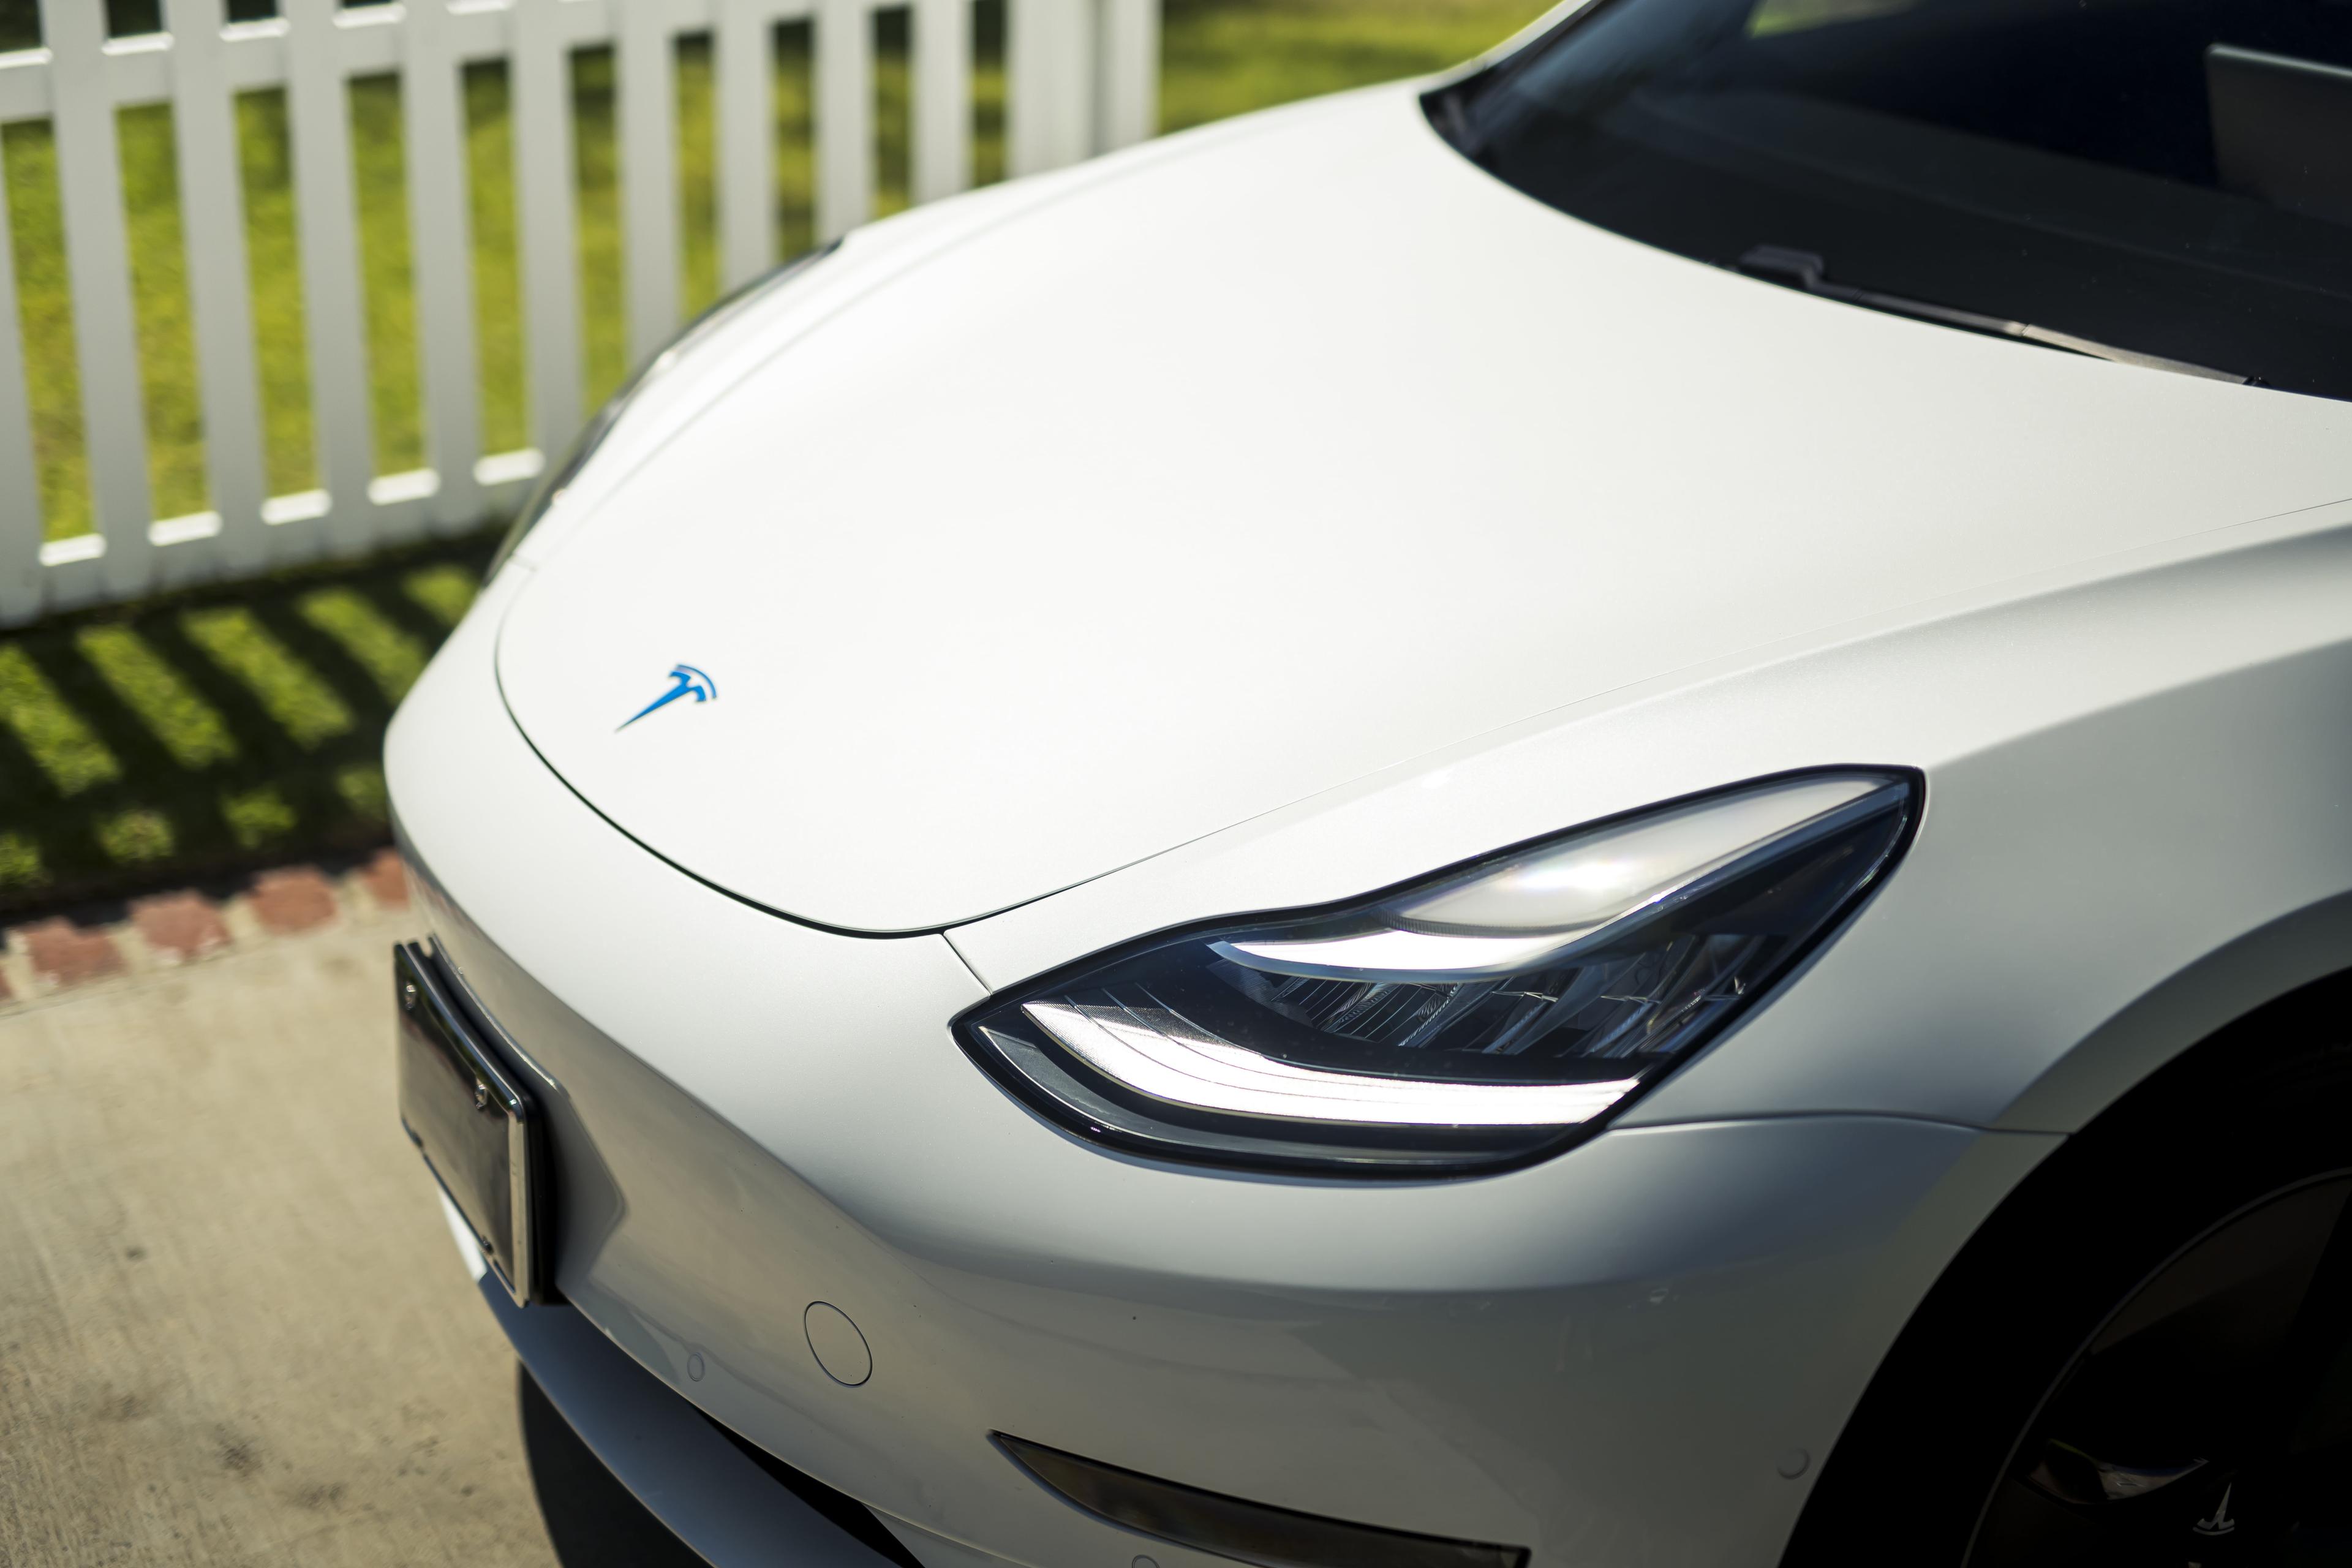 Elon Musk holds a lot of sway over Tesla investors.